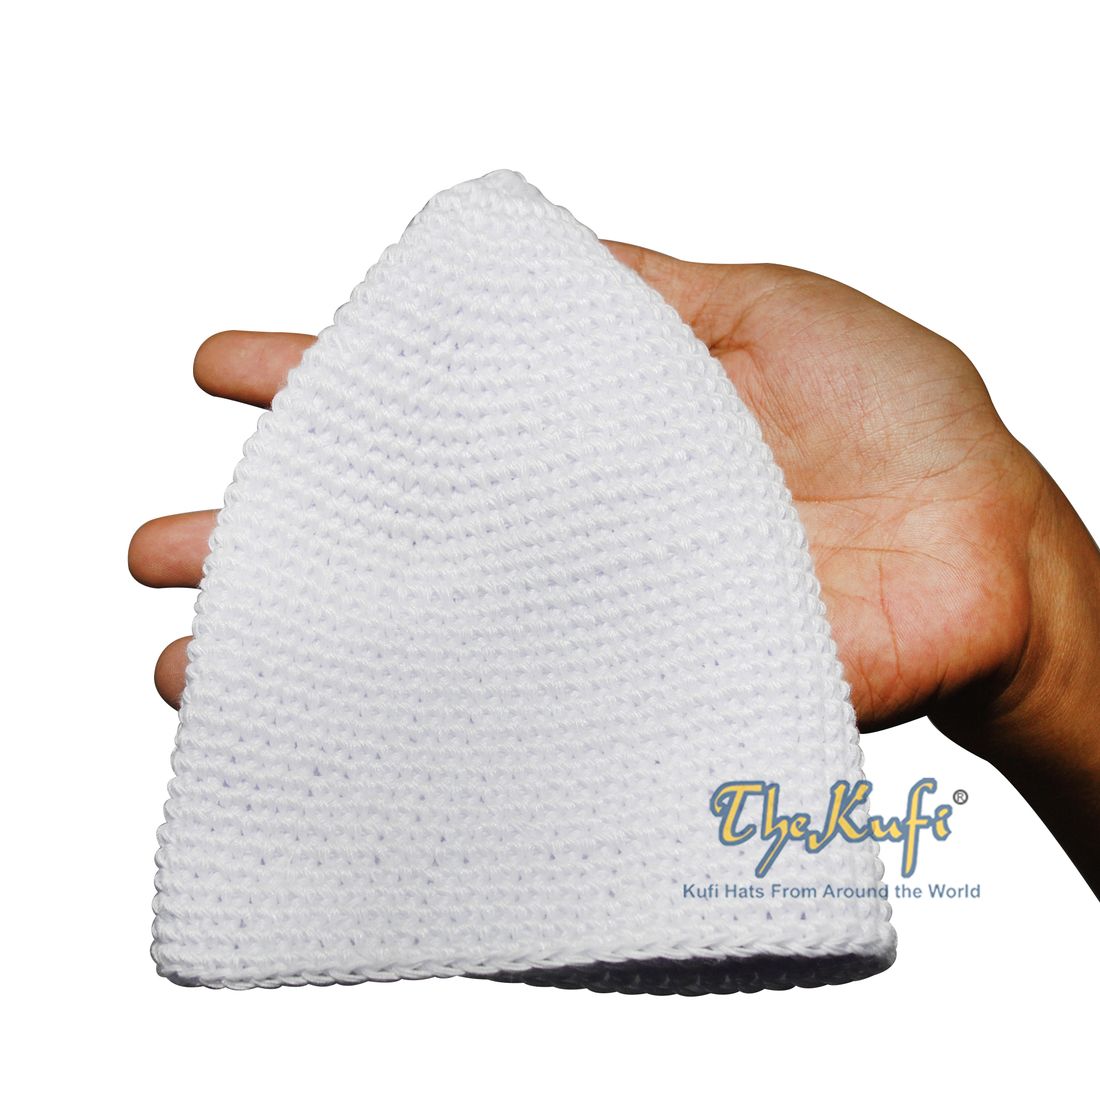 White Cotton Kufi Skull Cap Hand-Crocheted 100% Comfortable Fit for Salah